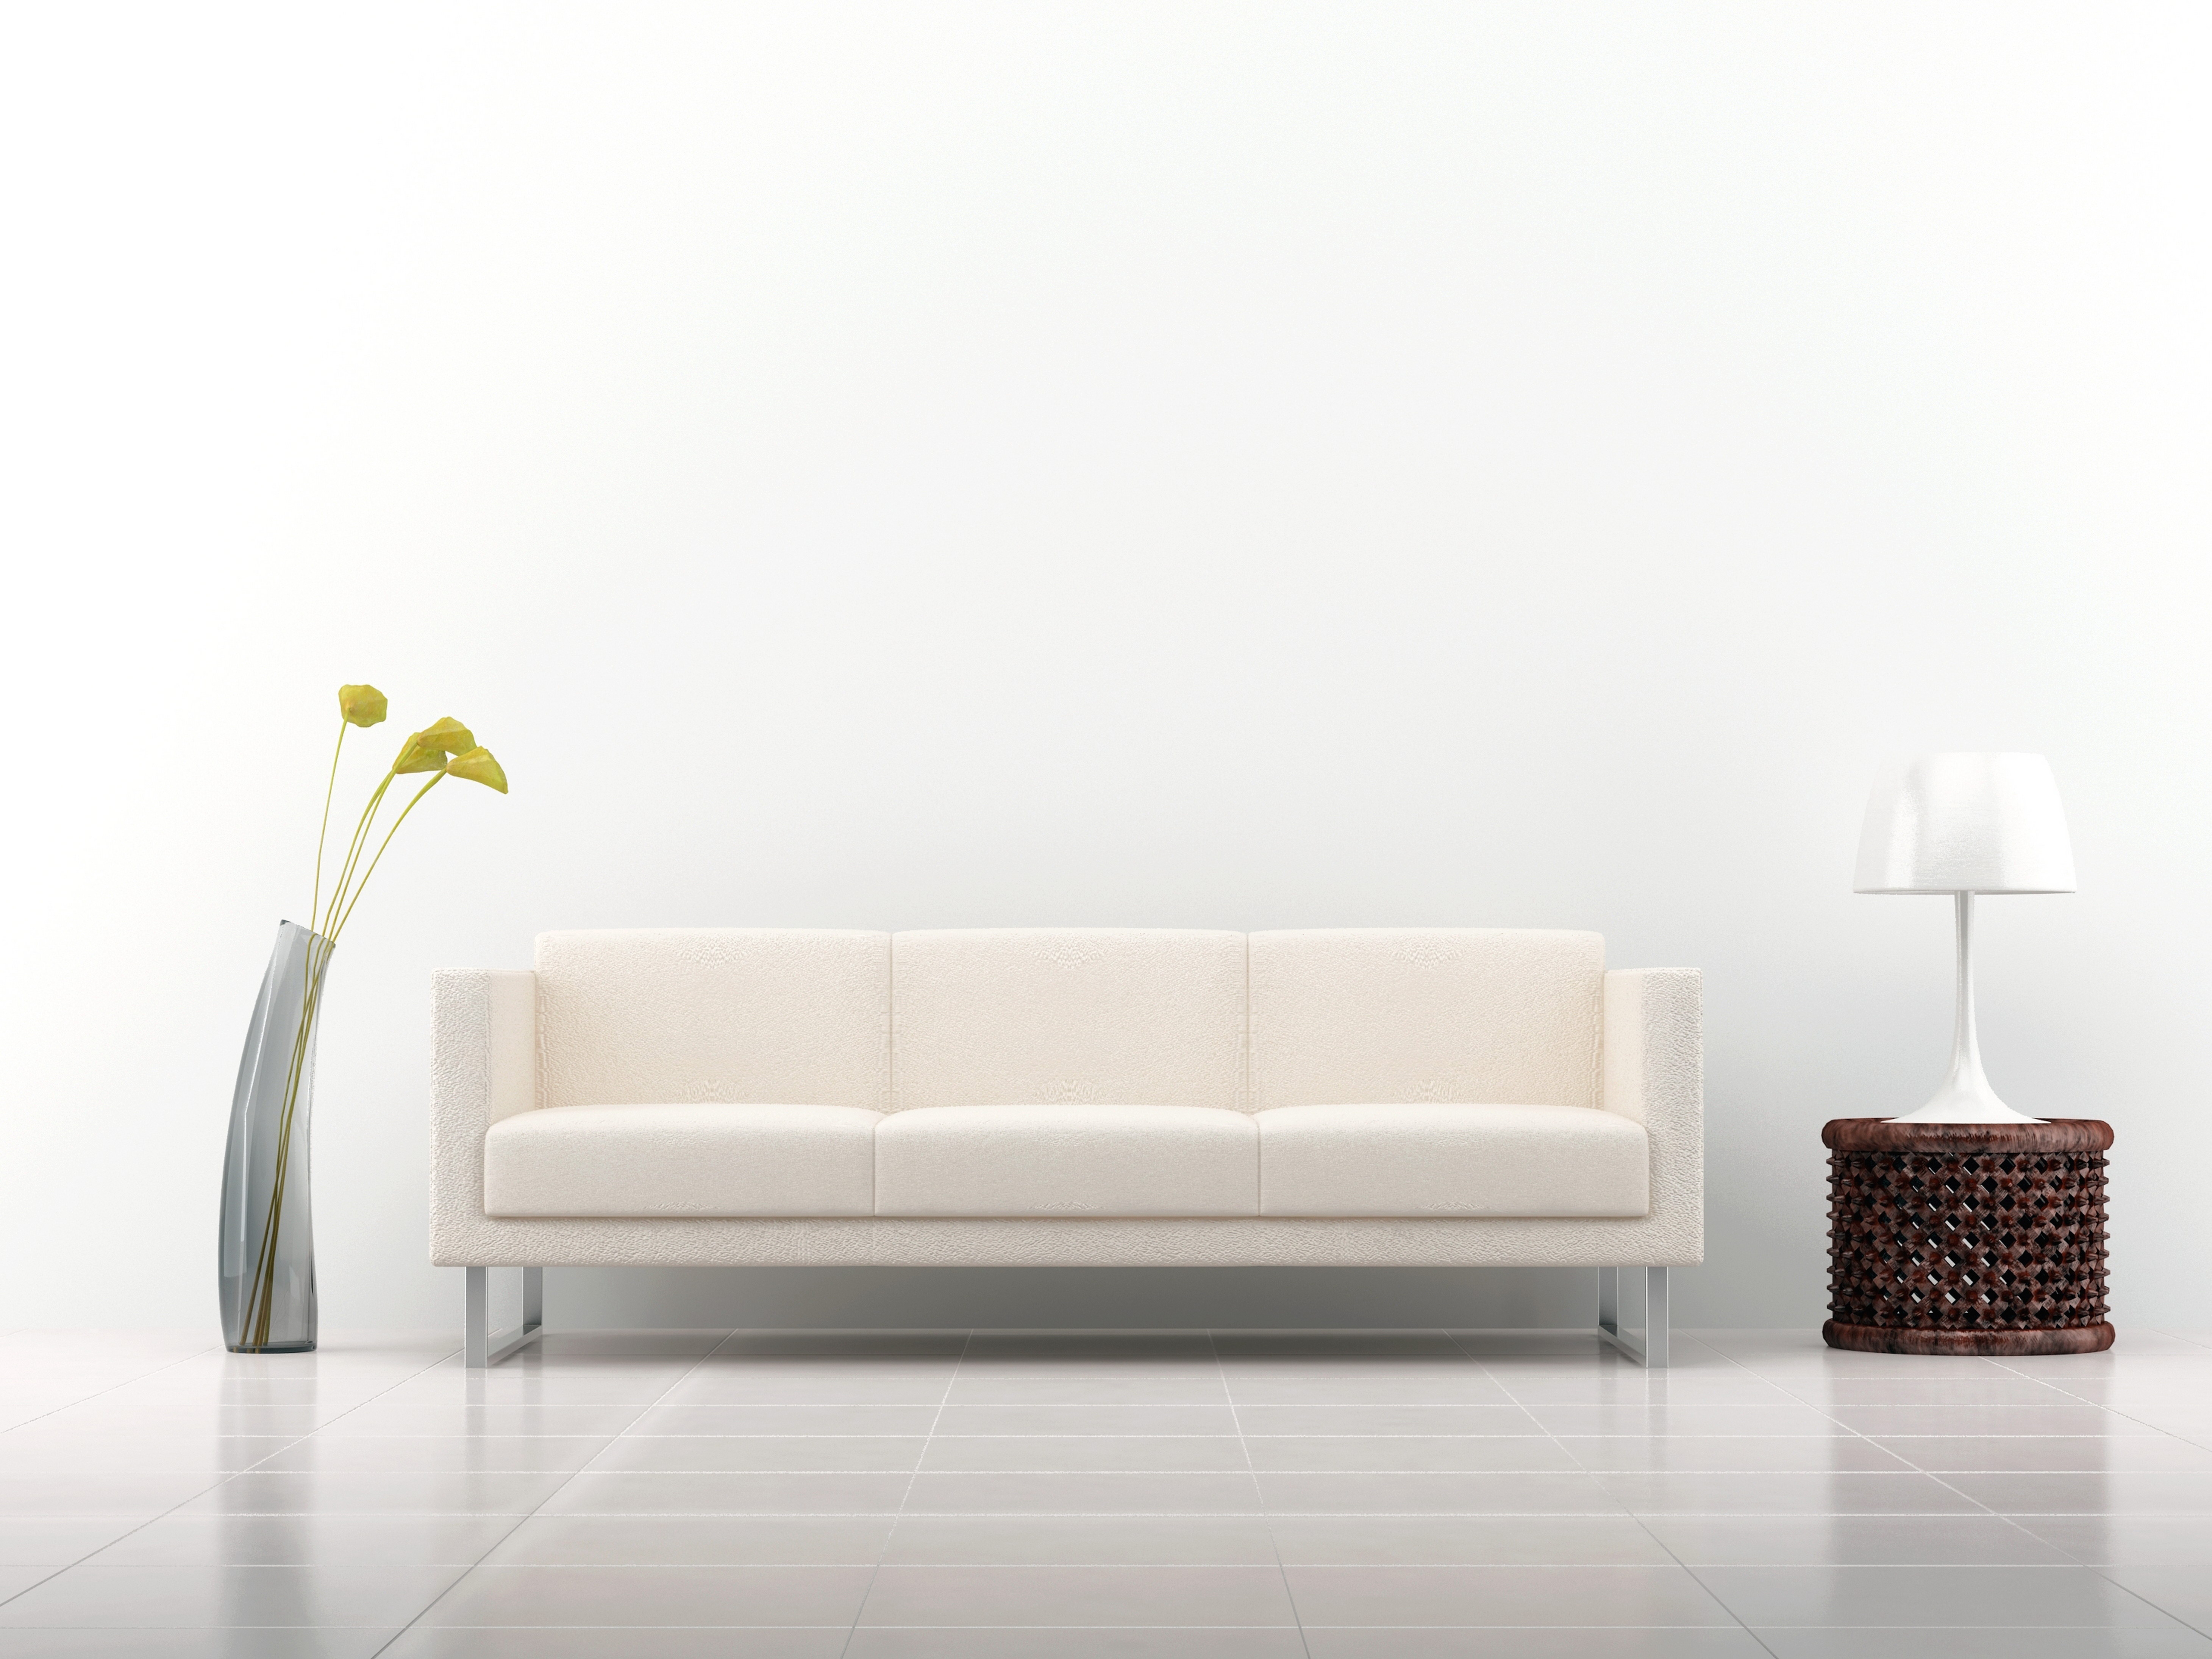 decoration, miscellanea, interior, miscellaneous, lamp, vase, sofa, white background